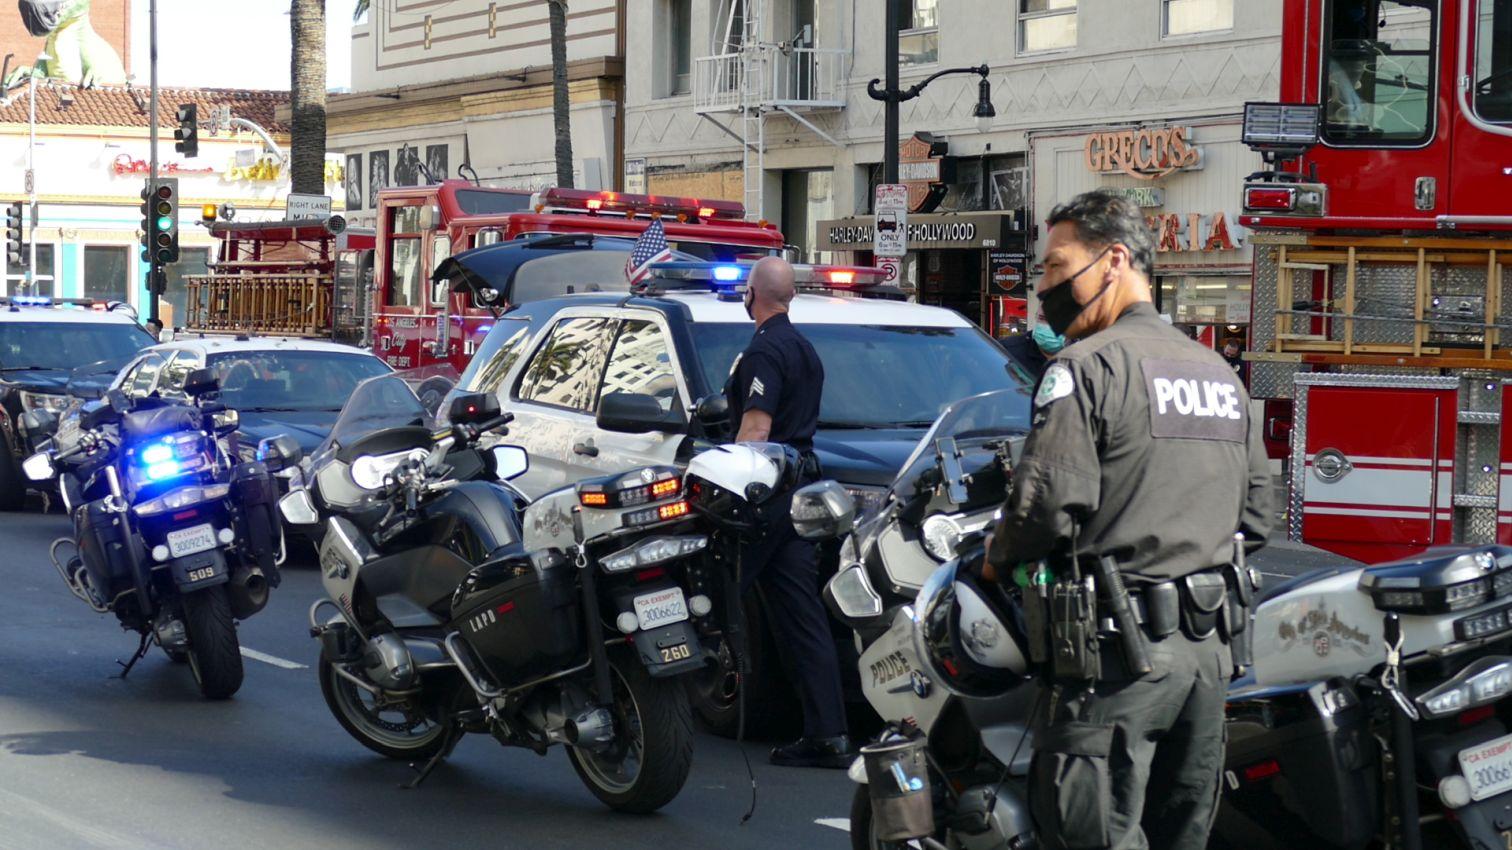 DWI Suspect apos s Vehicle Crashes Through Hollywood Blvd During Spring Break